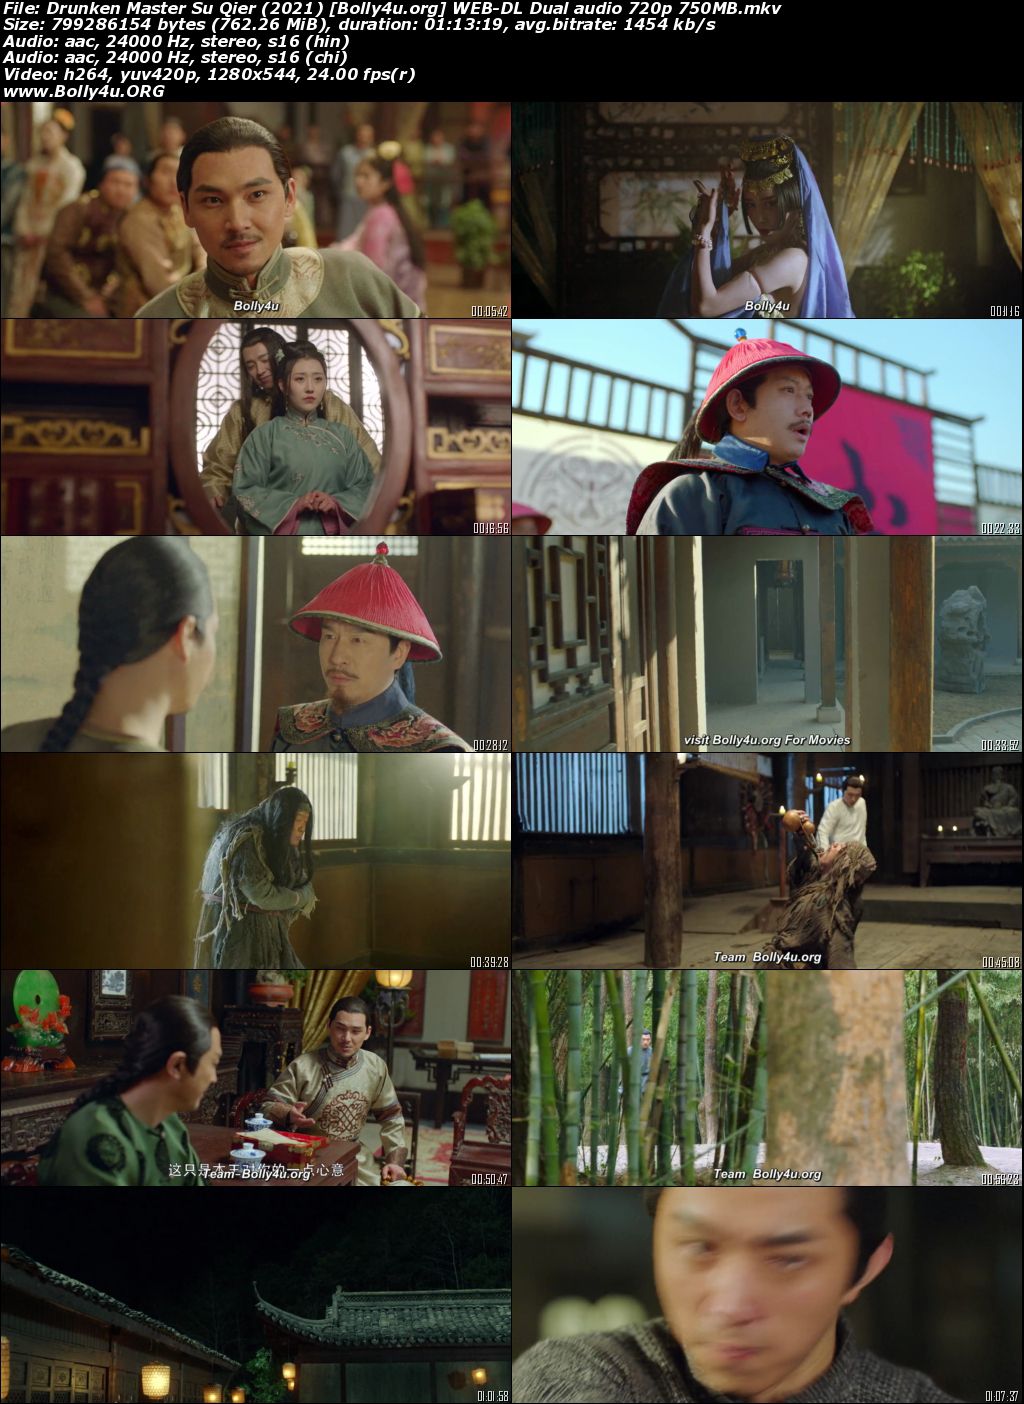 Drunken Master Su Qier 2021 WEB-DL Hindi Dual Audio Full Movie Download 720p 480p